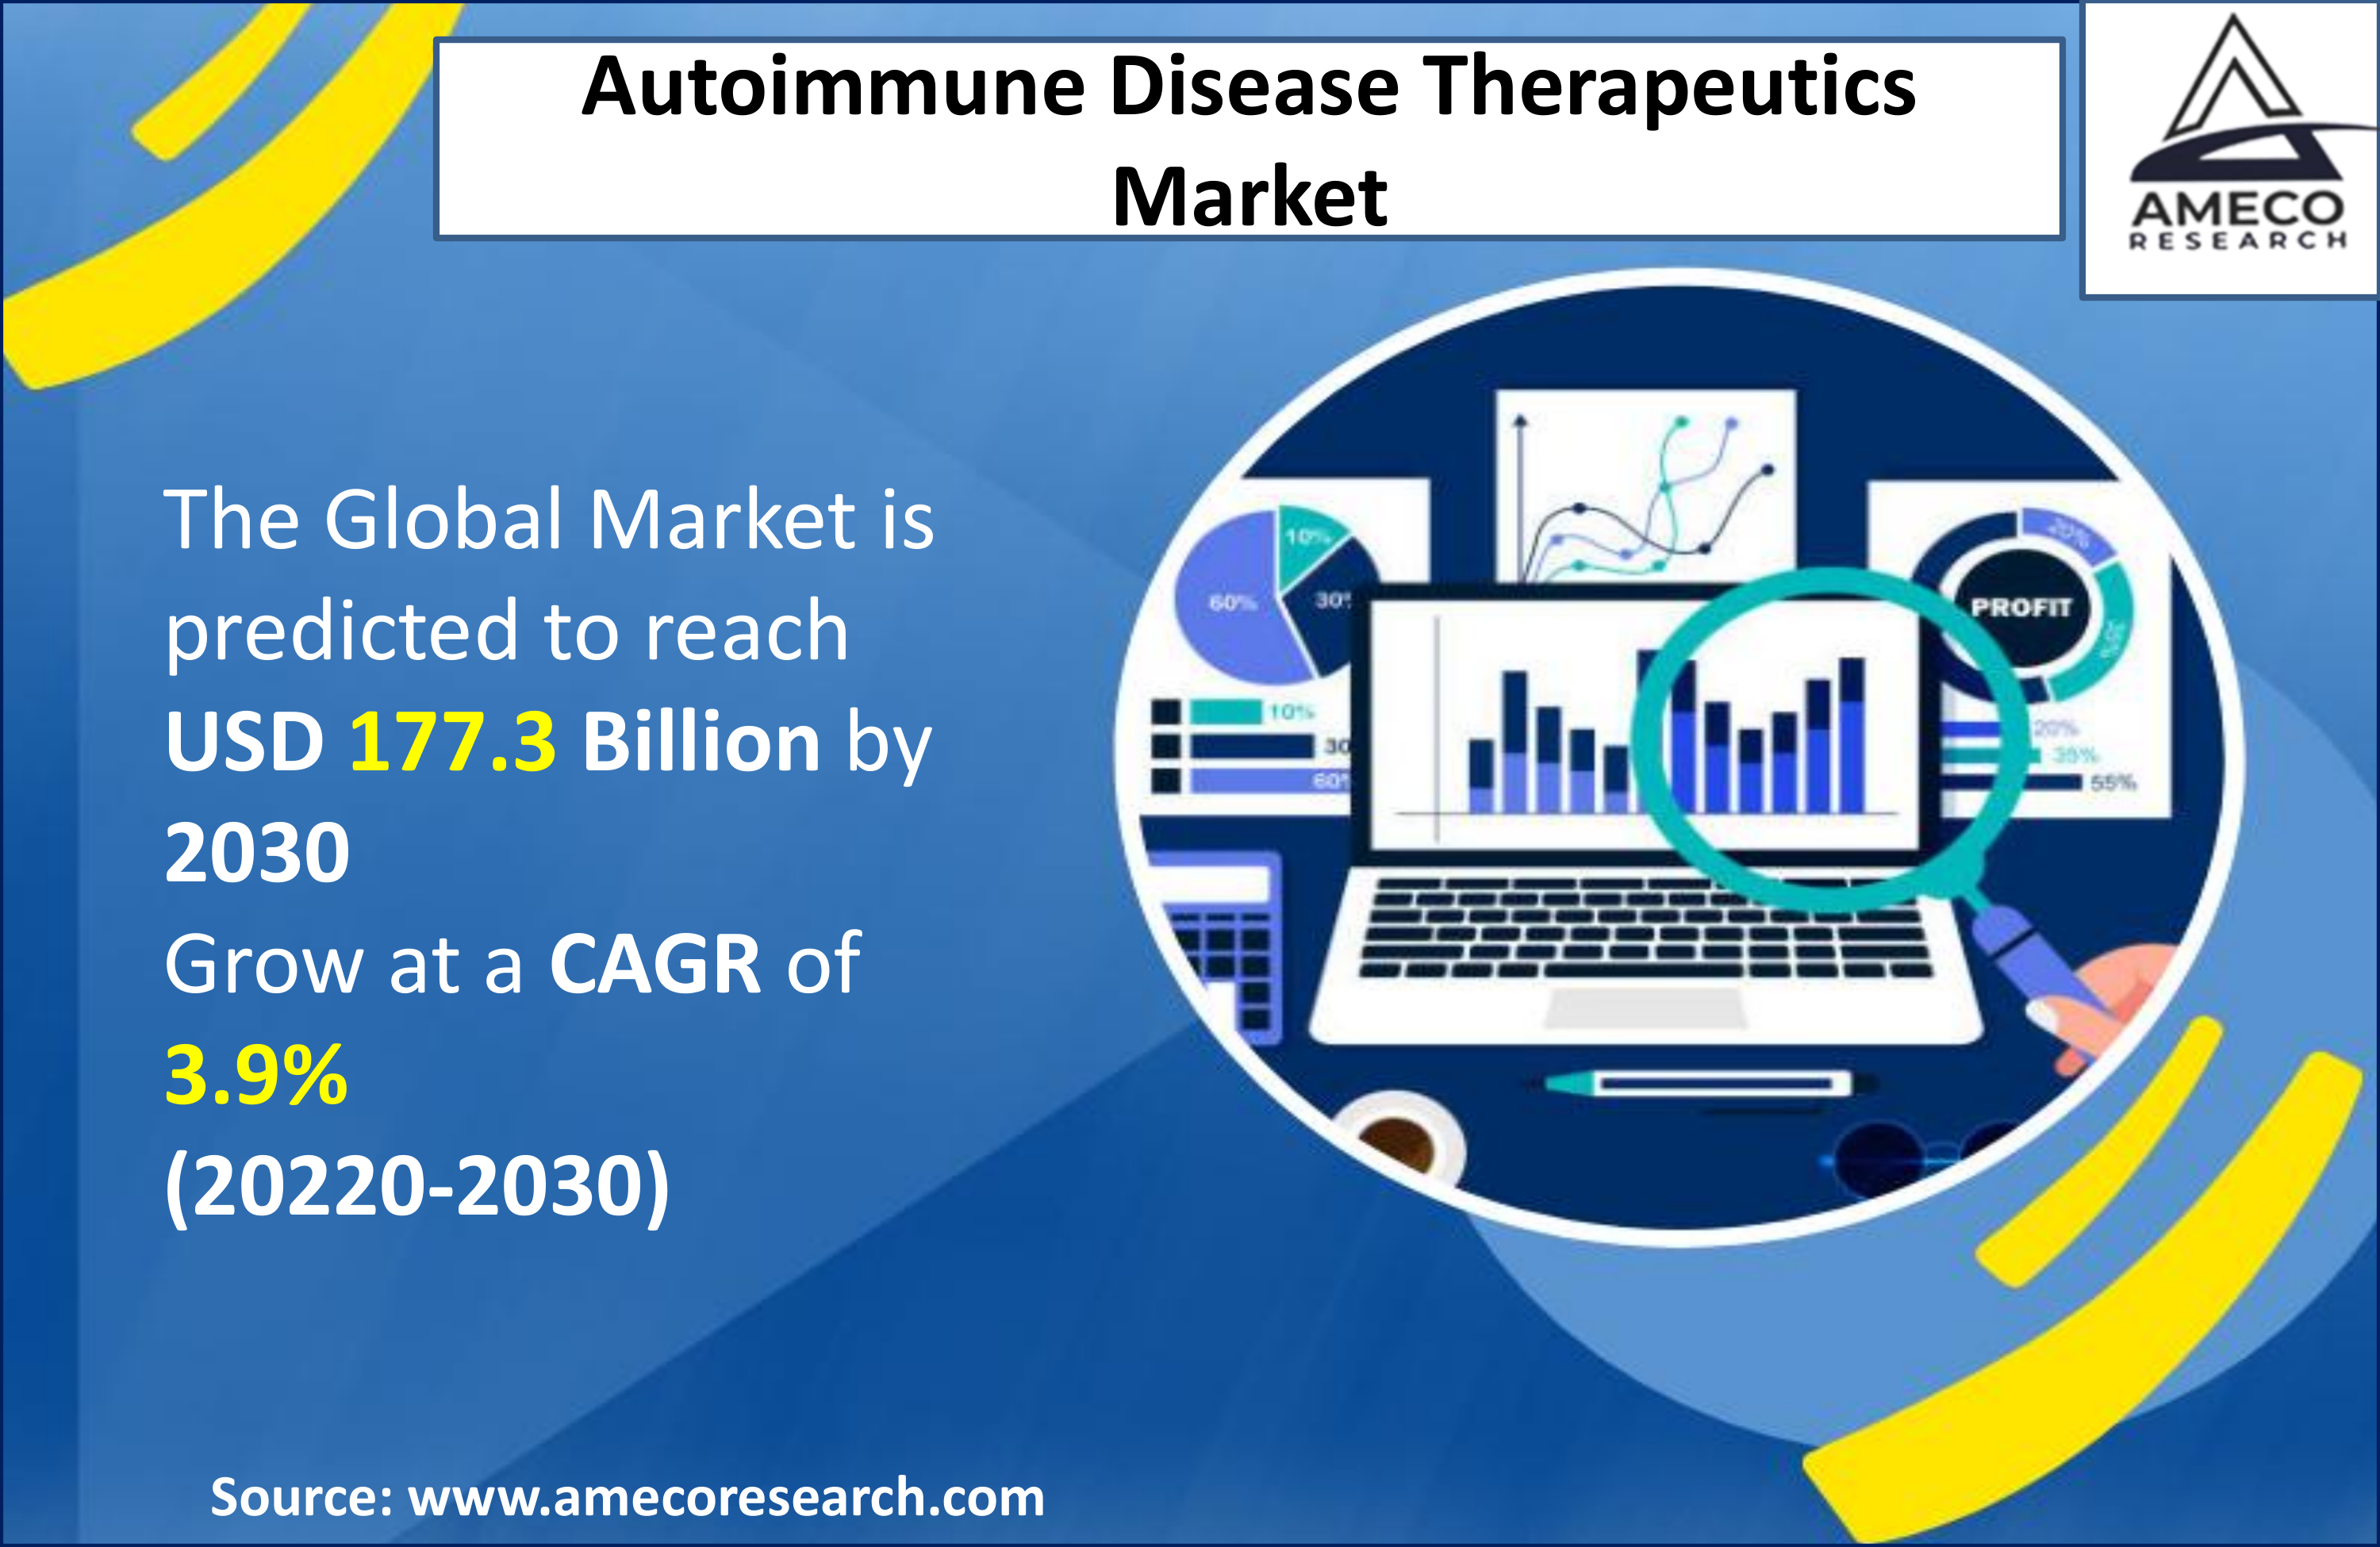 Autoimmune Disease Therapeutics Market